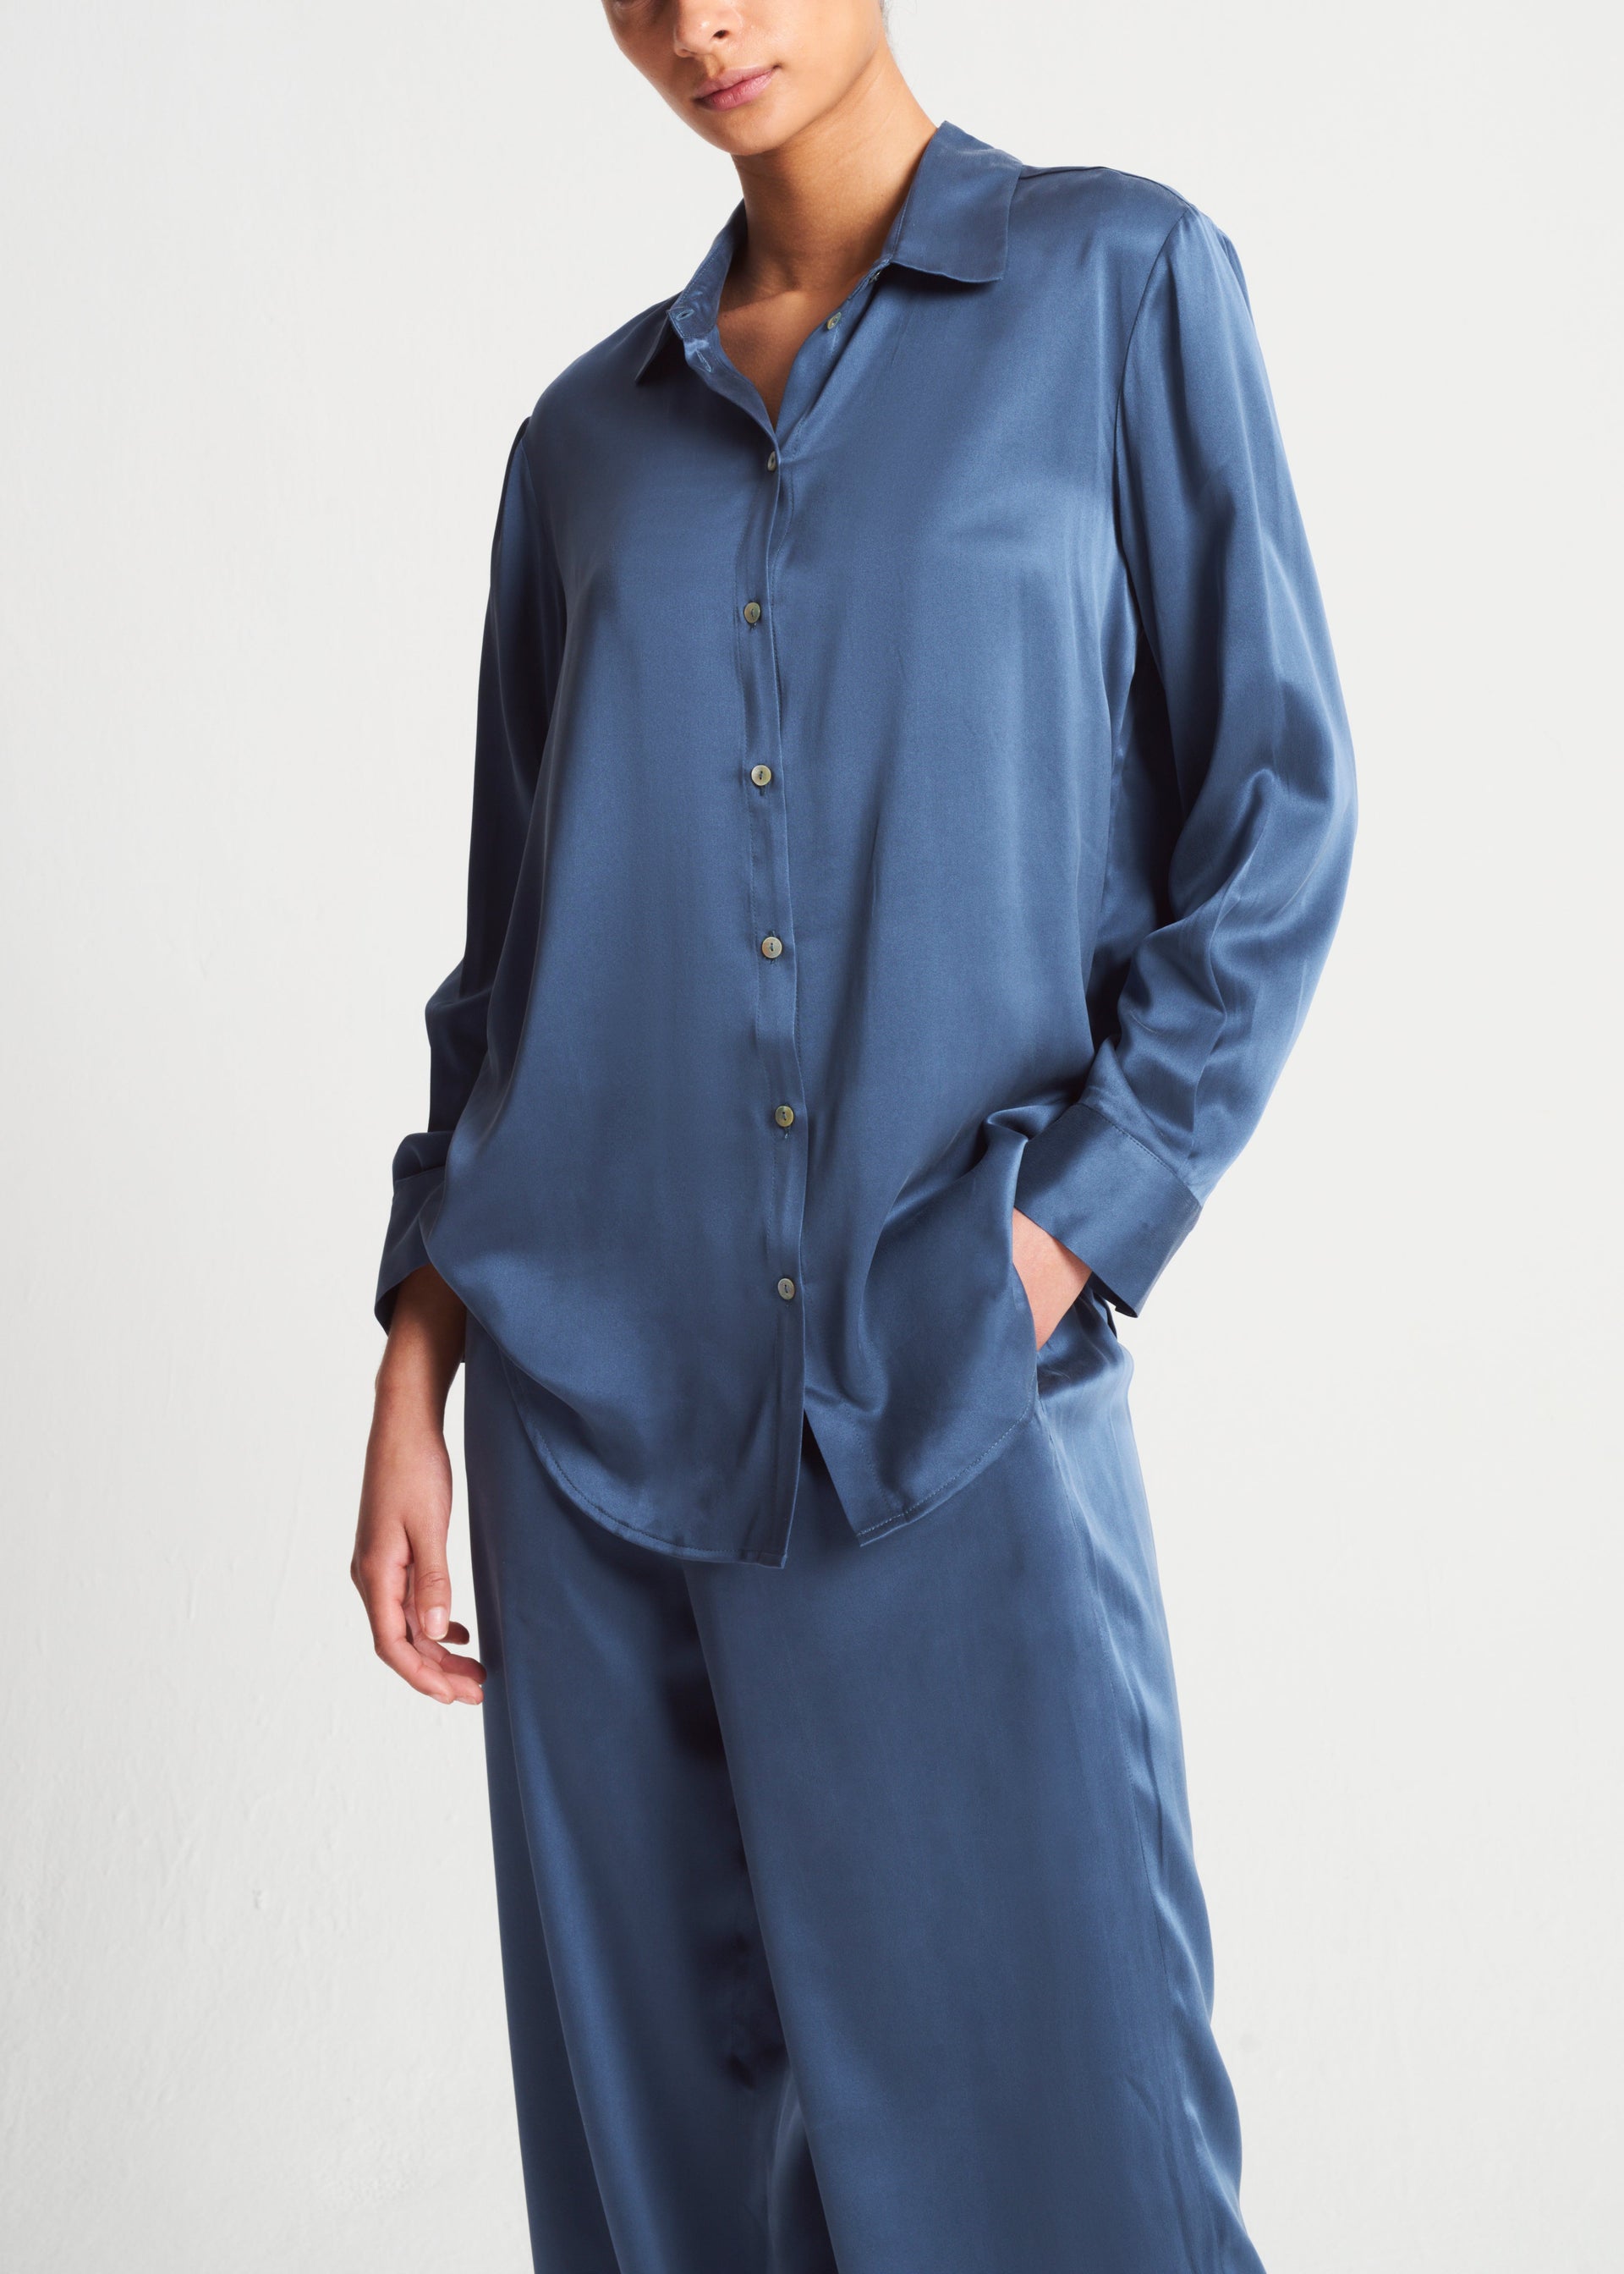 London Pyjama Top Steel Blue Silk Charmeuse